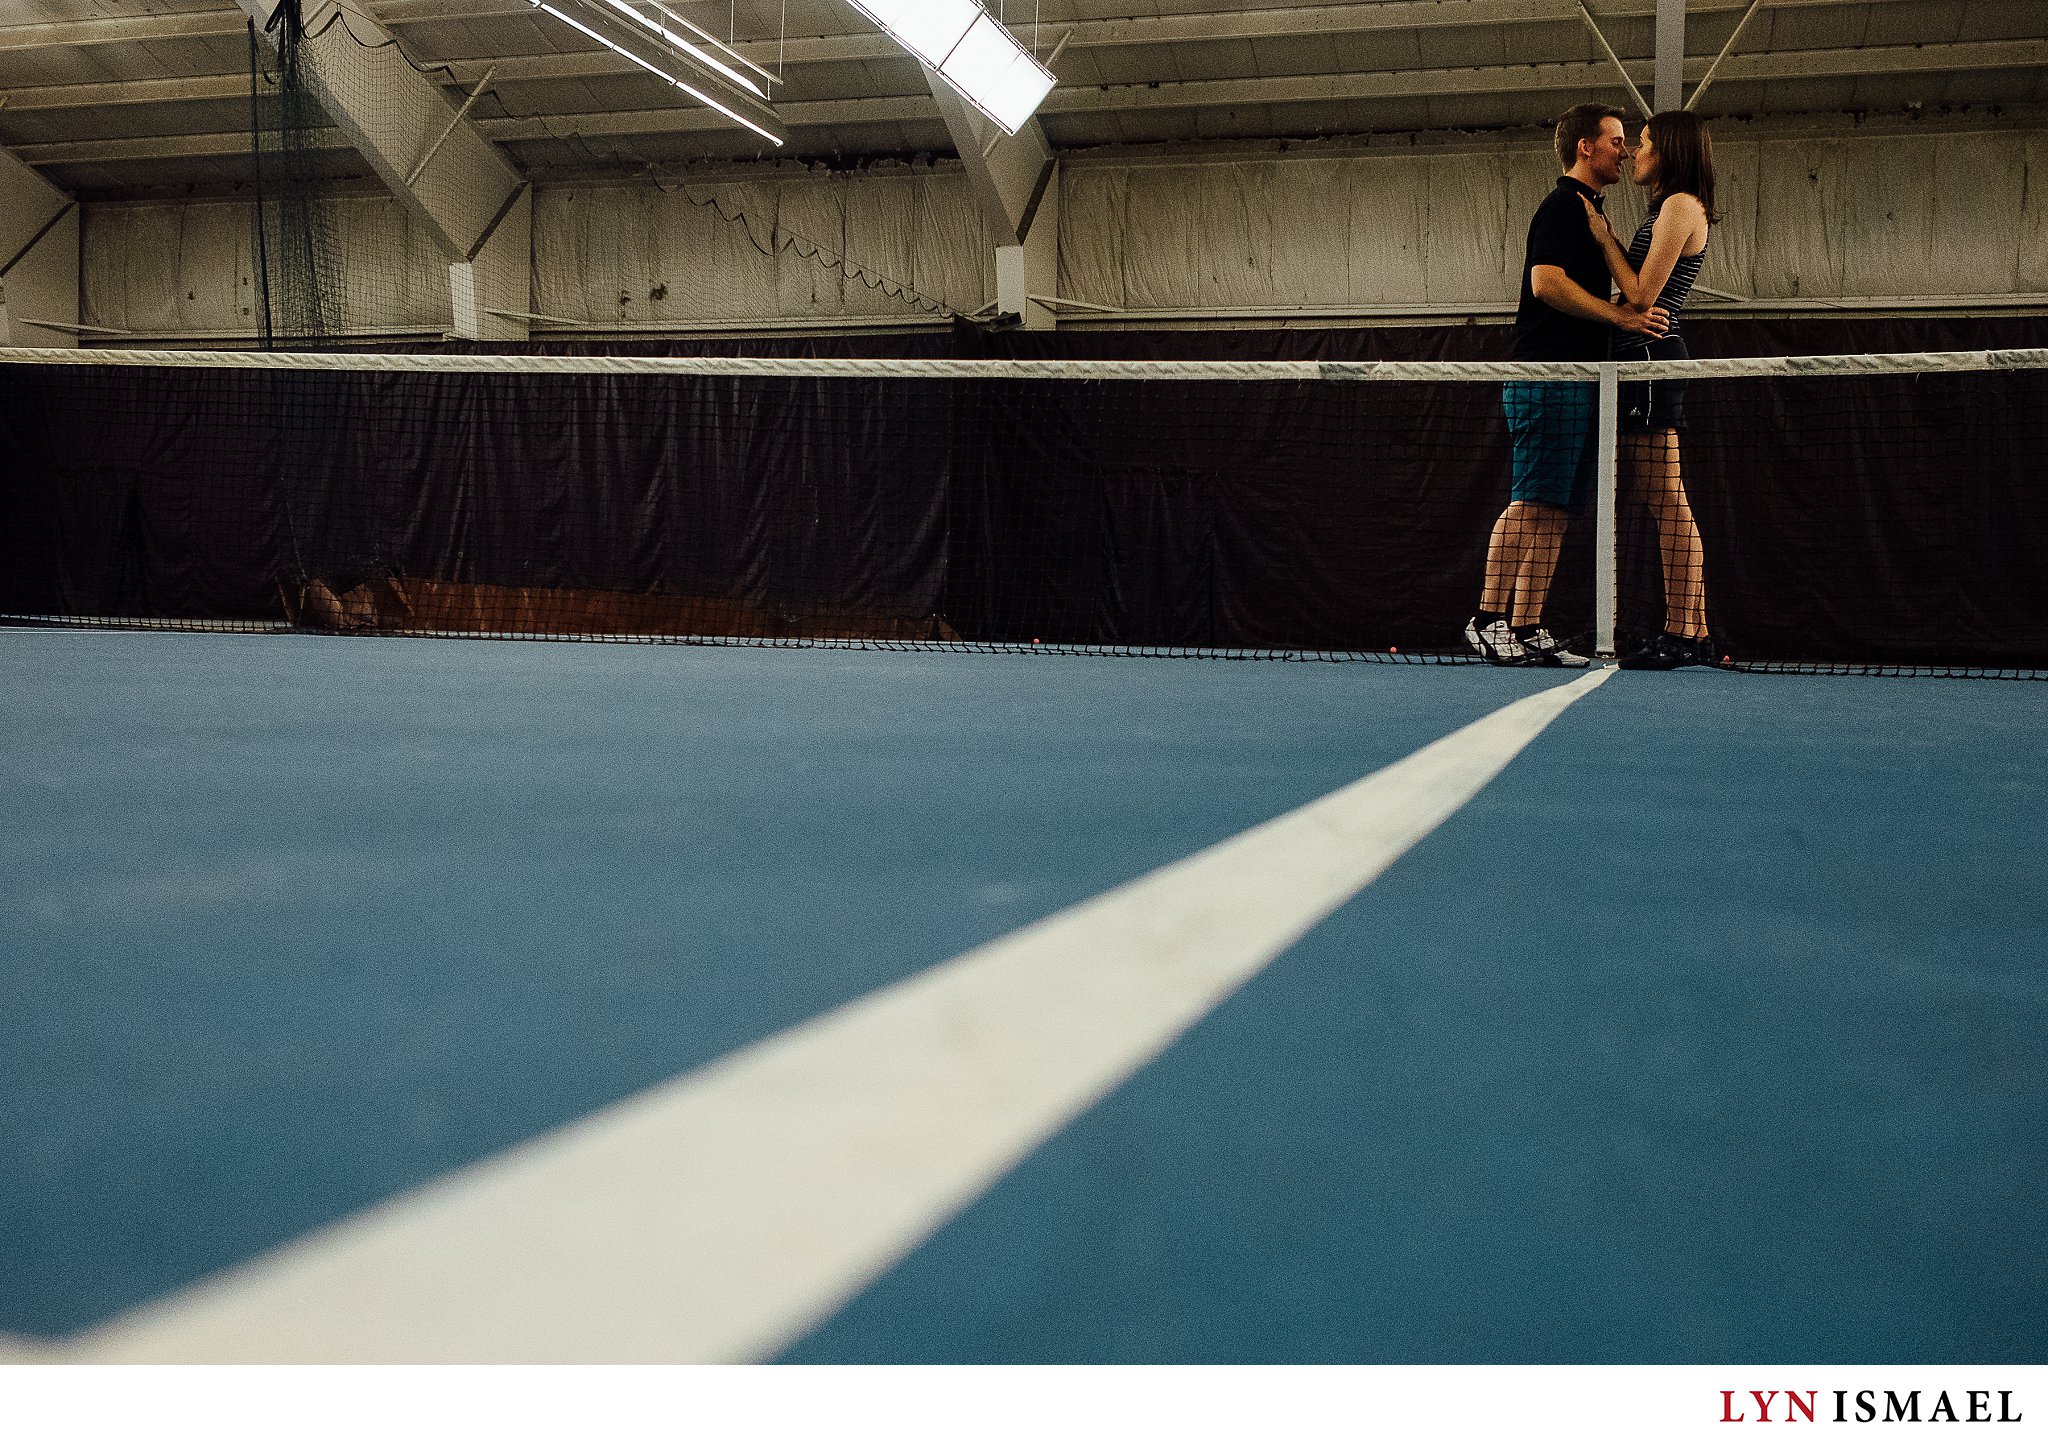 Engagement portrait at an indoor tennis court.